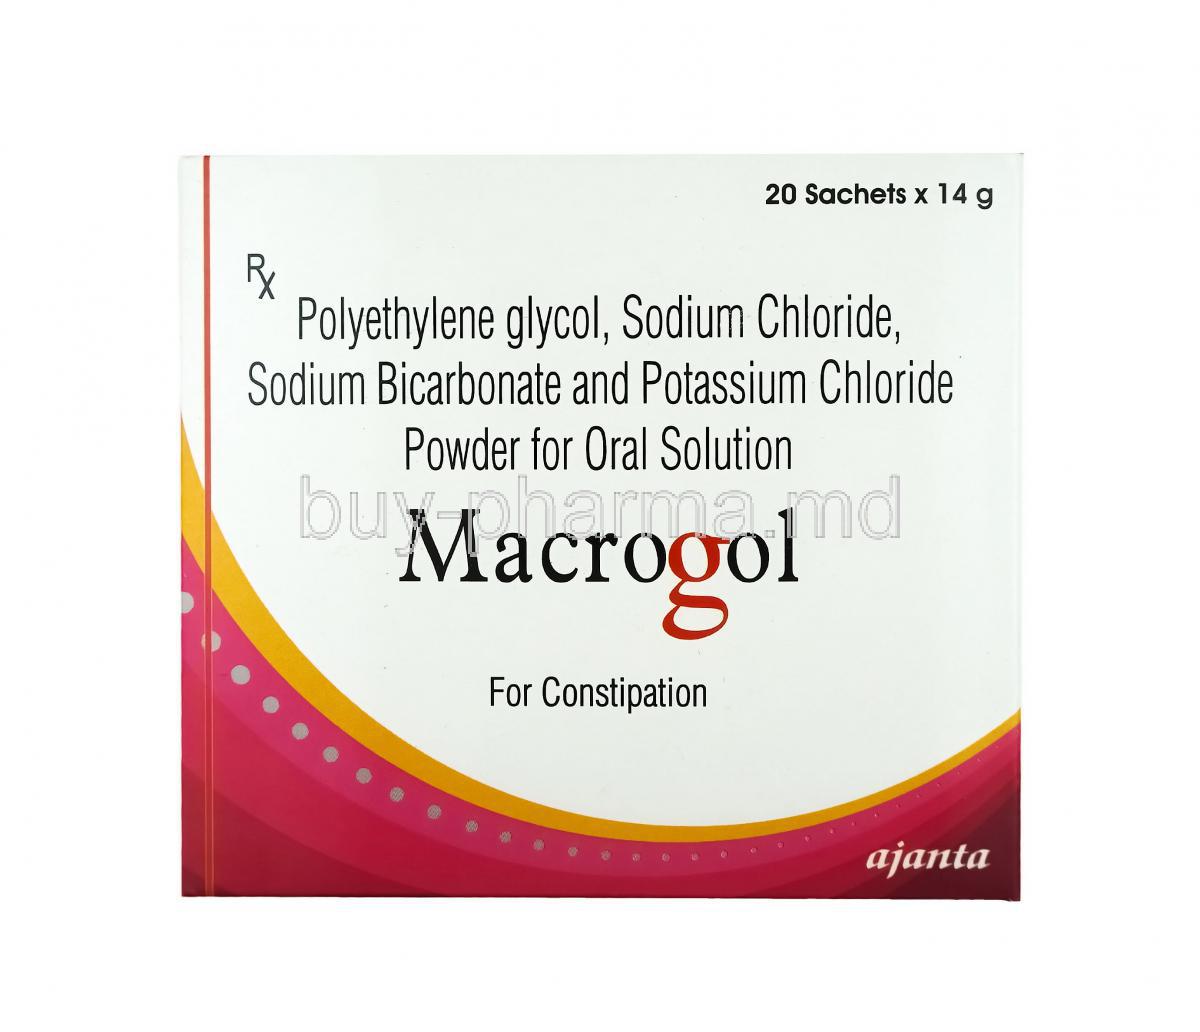 Macrogol Powder, Macrogol, Sodium chloride, Sodium bicarbonate and Potassium chloride